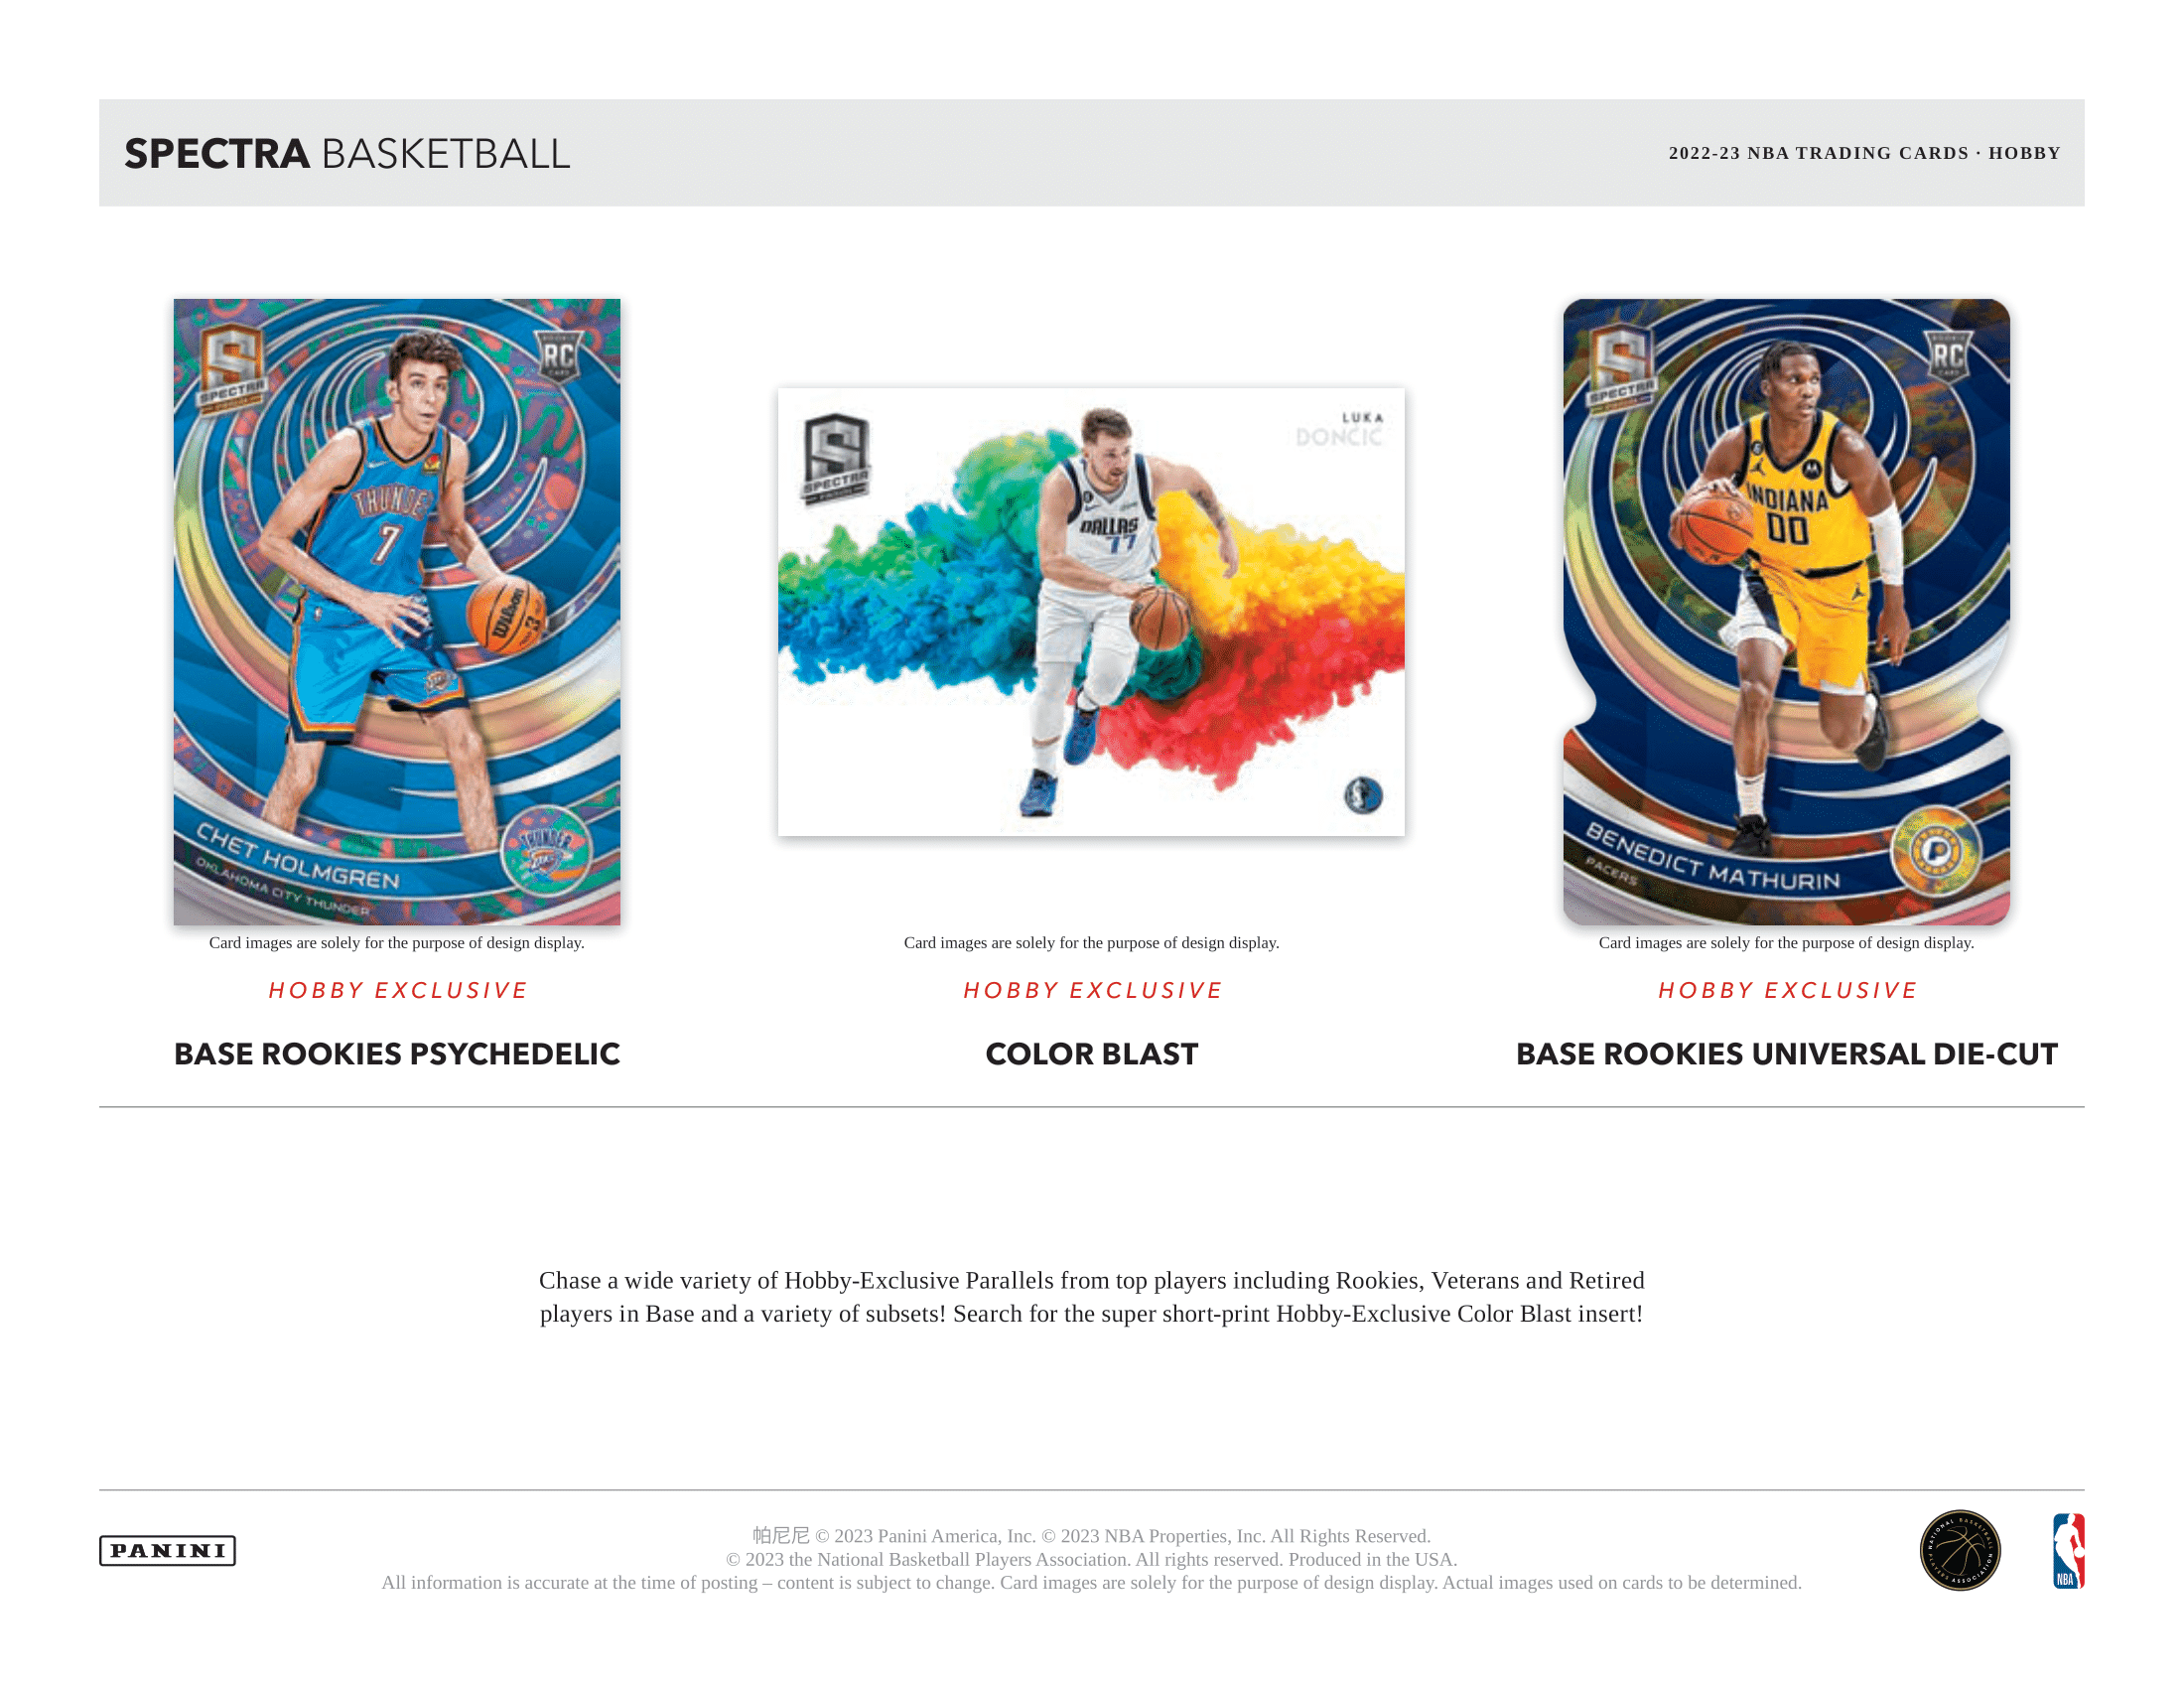 Panini - 2022/23 Spectra Basketball (NBA) - Hobby Box - The Card Vault